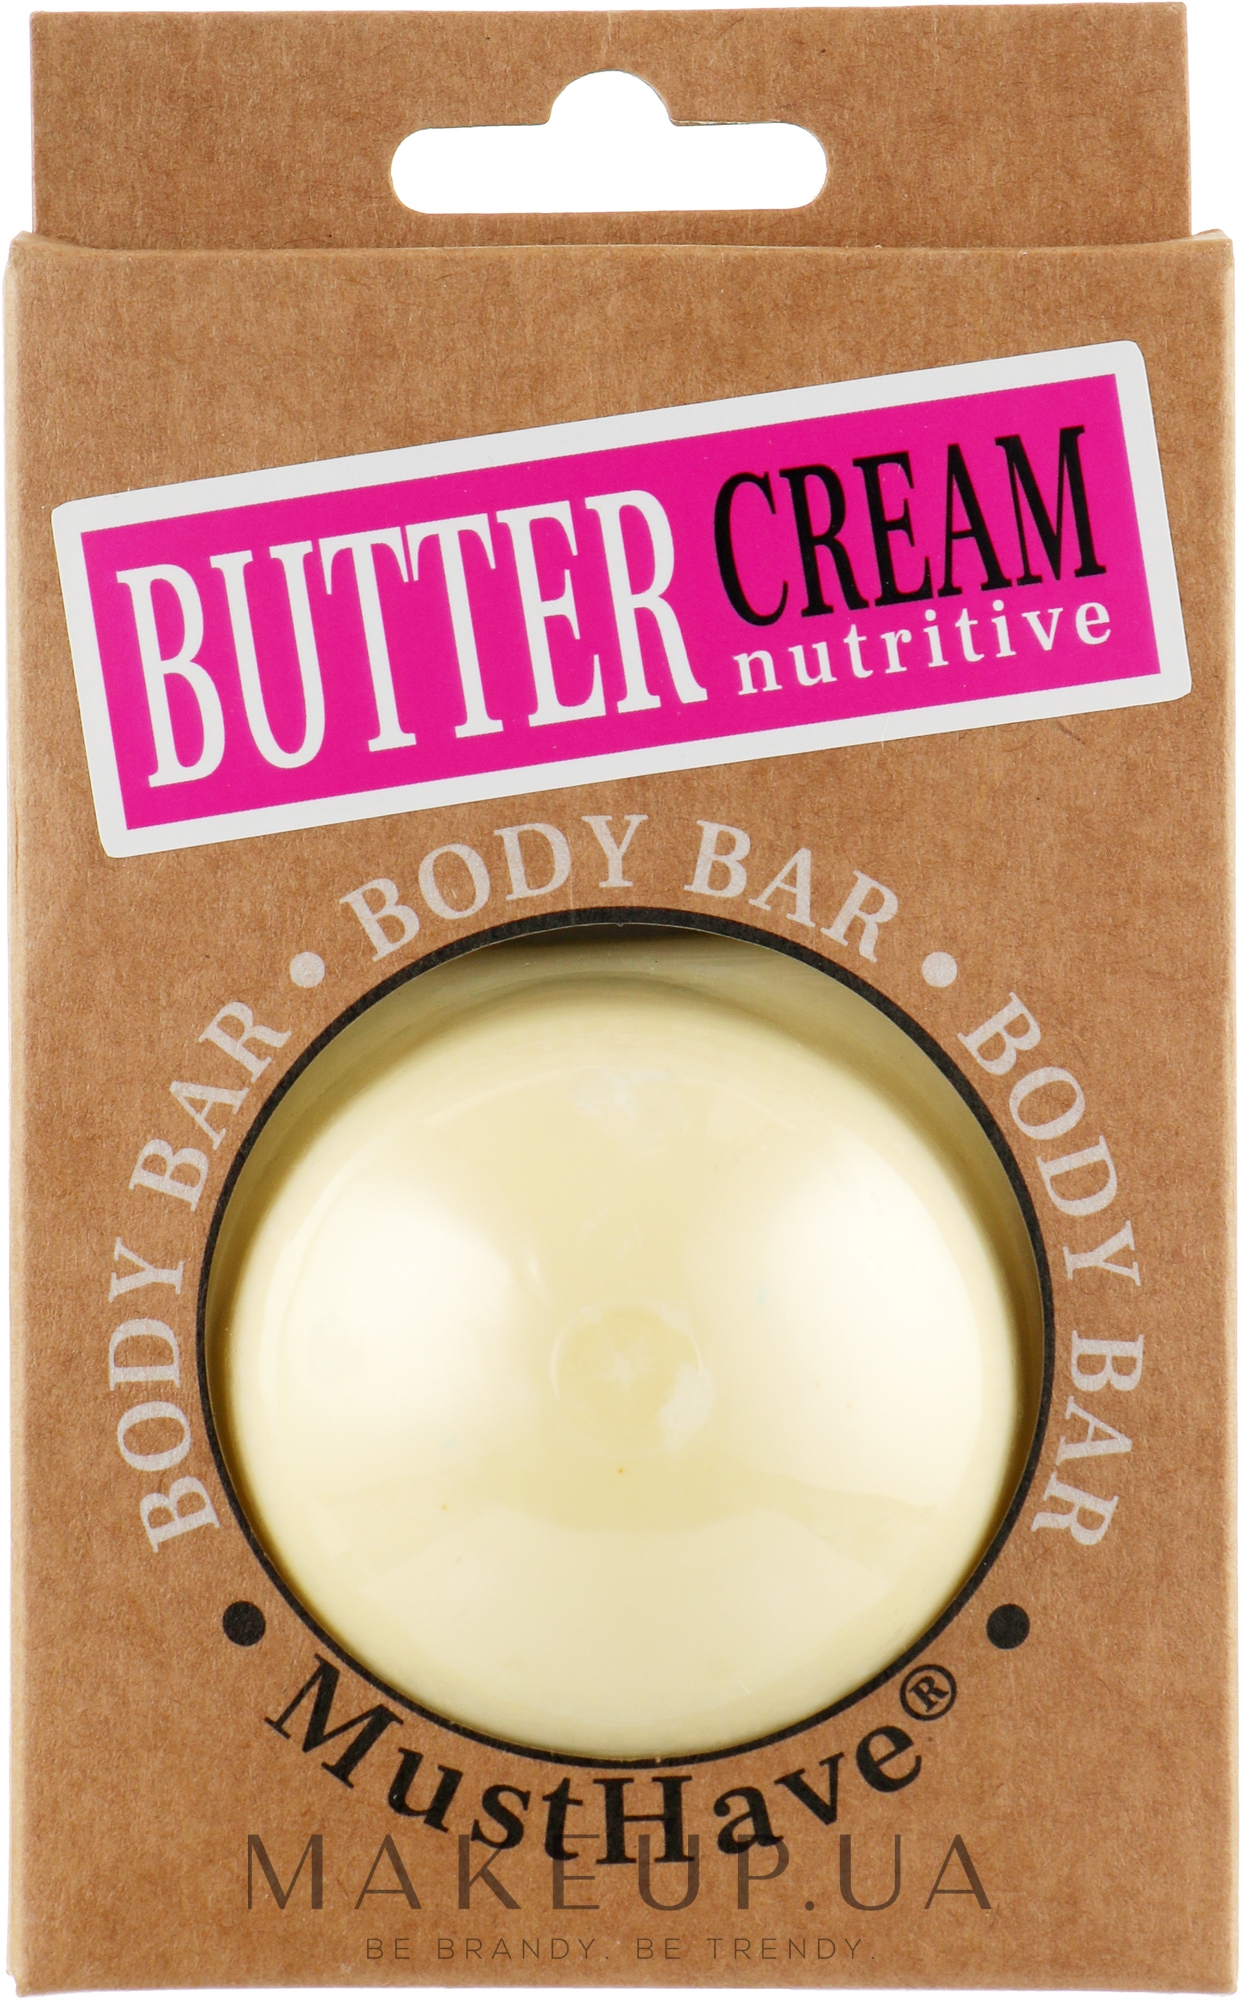 Тверде крем-масло для тіла - Flory Spray Must Have Butter Cream Body Bar — фото 60g